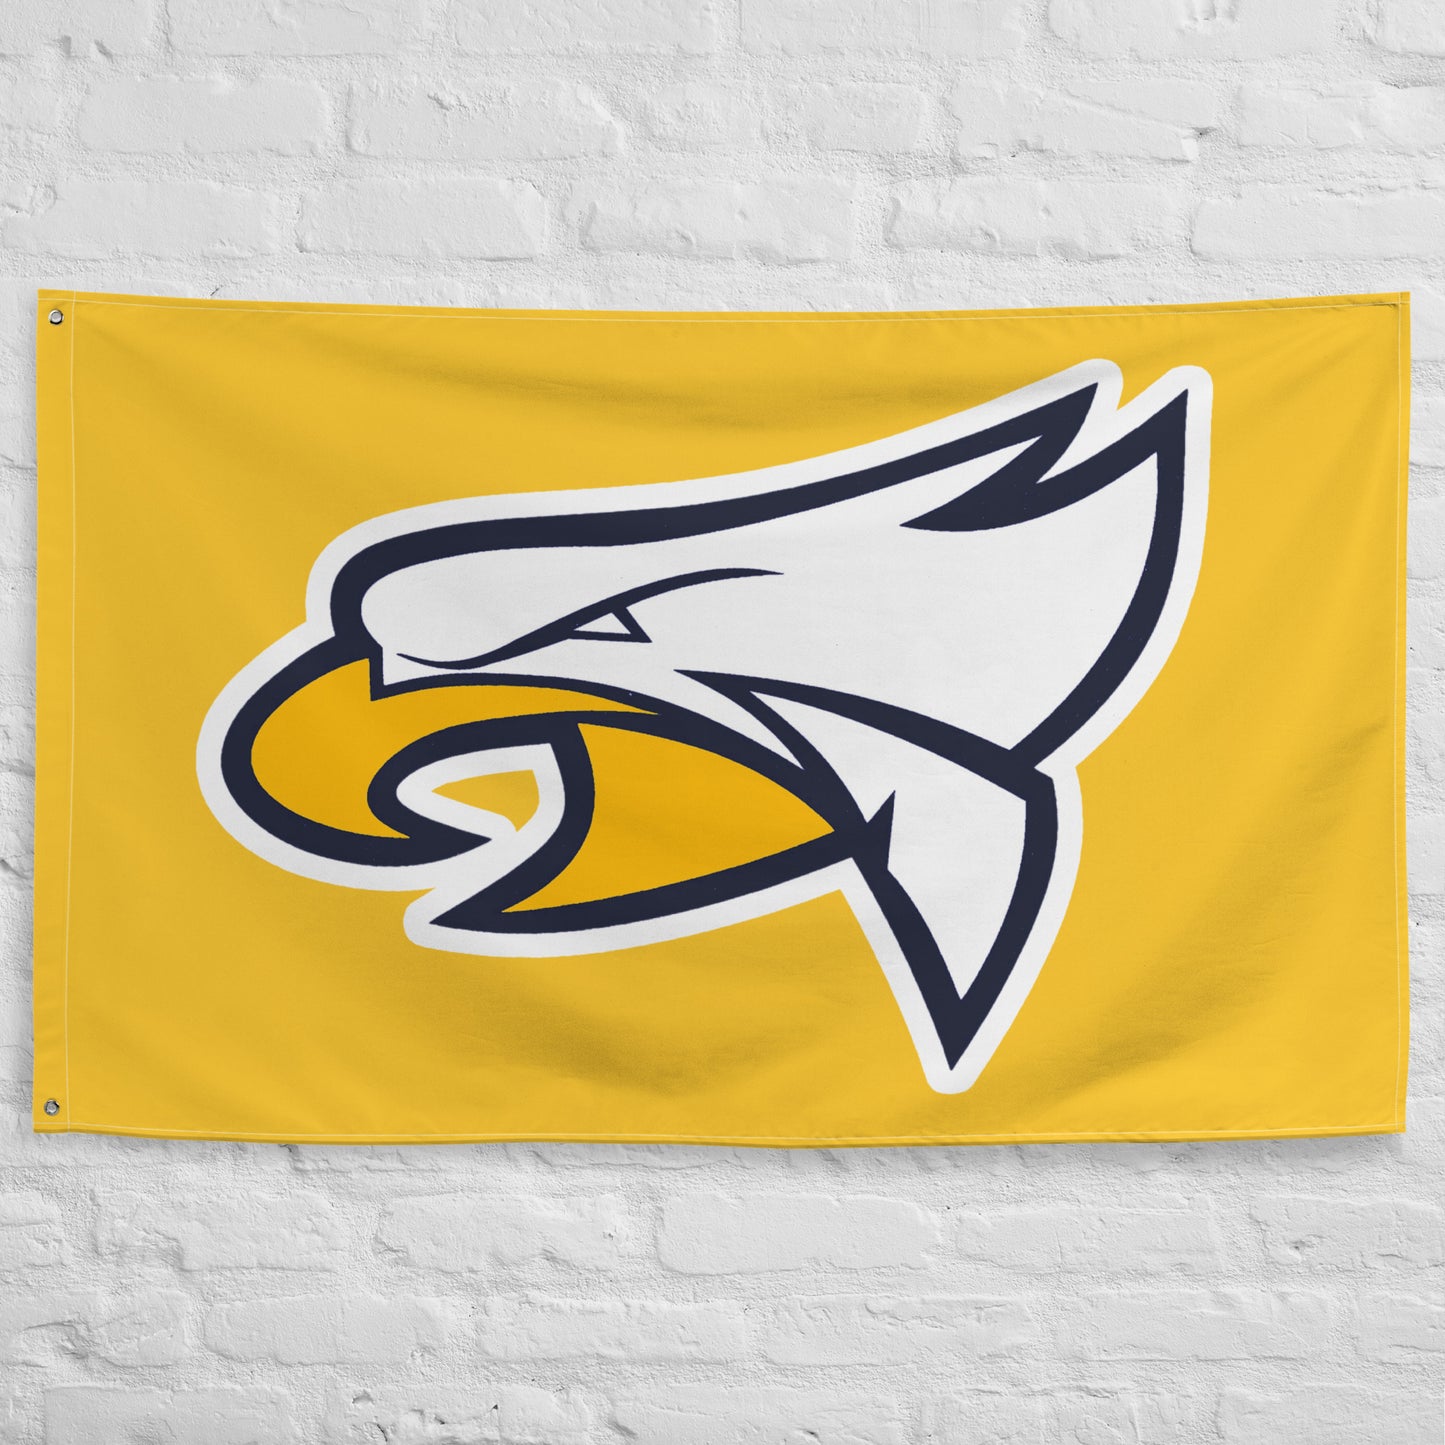 Eagle Yellow Flag